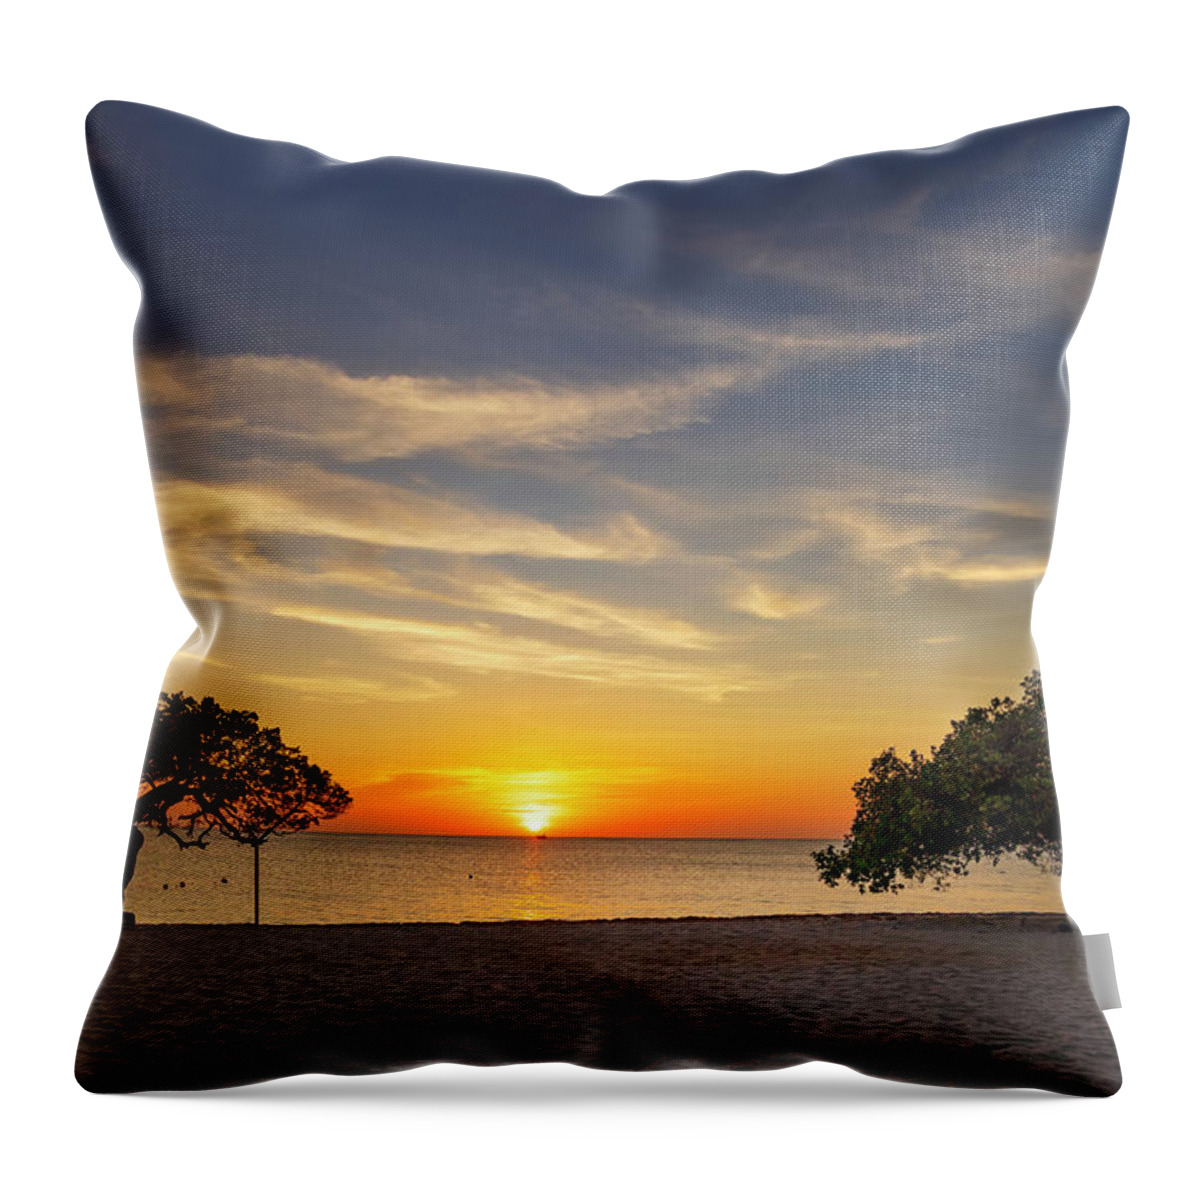 Estock Throw Pillow featuring the digital art Aruba, Eagle Beach Scene With Fofoti Tree #3 by Claudia Uripos